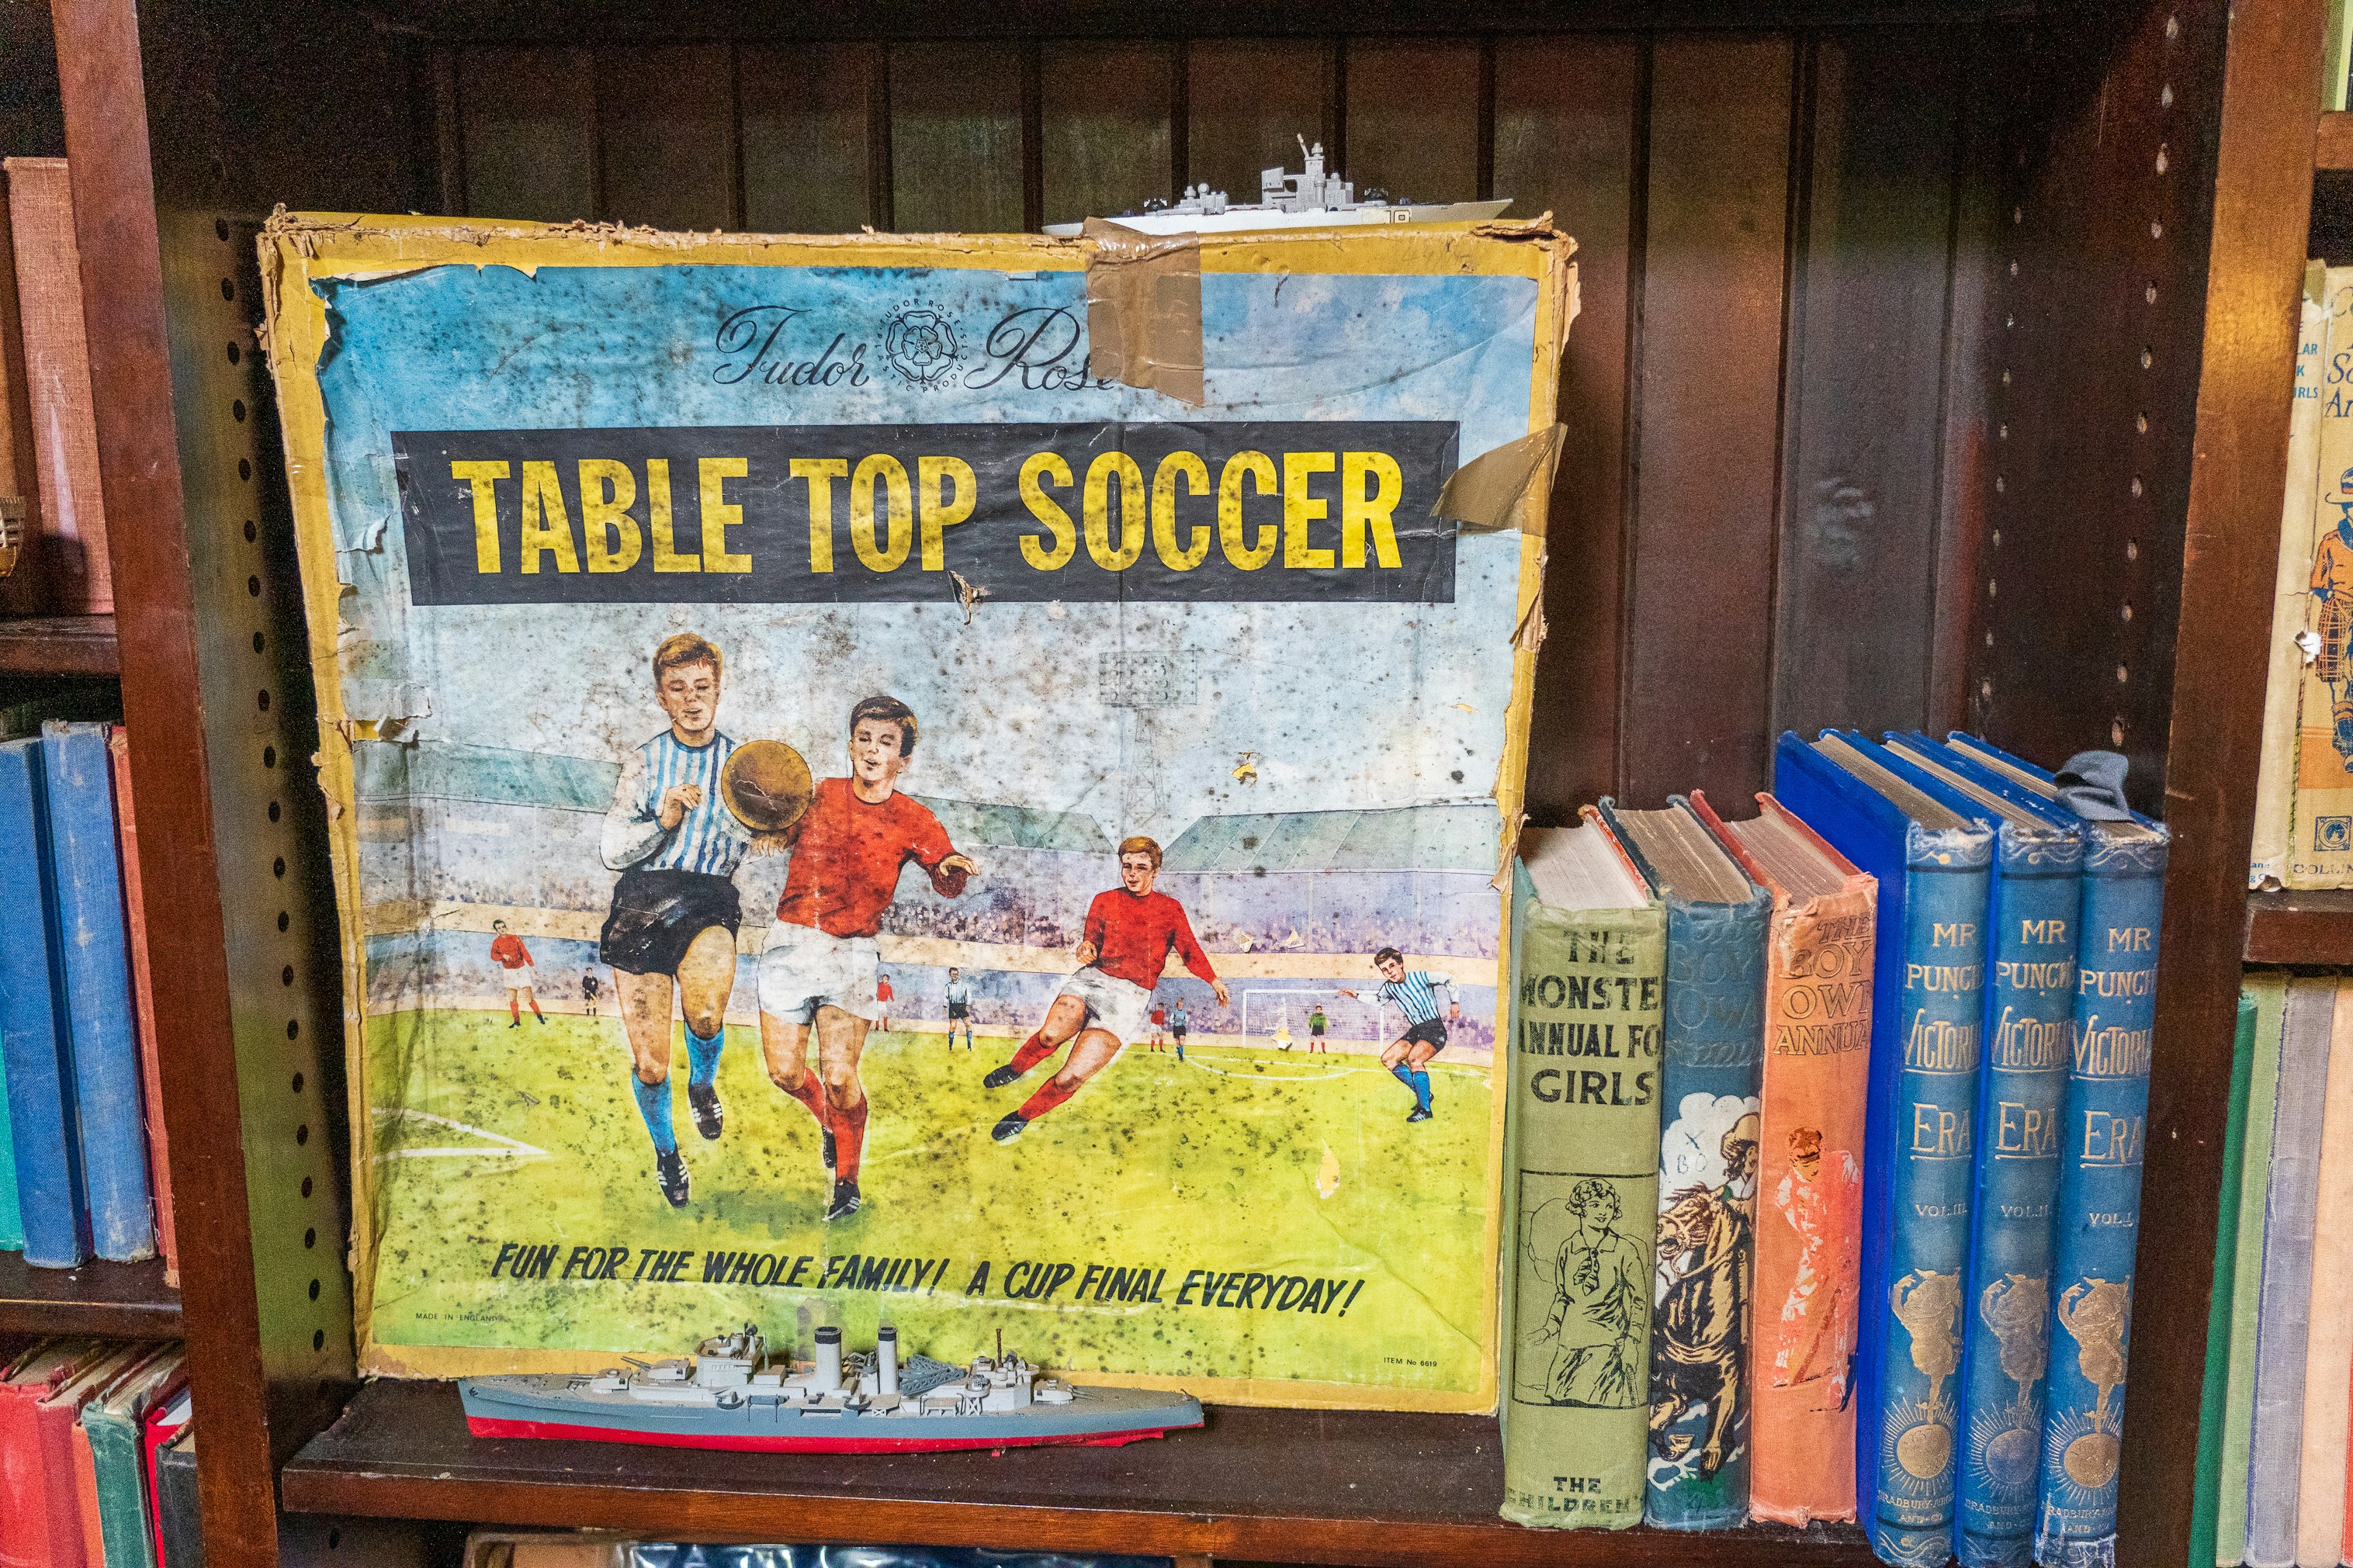 A retro table top soccer game.